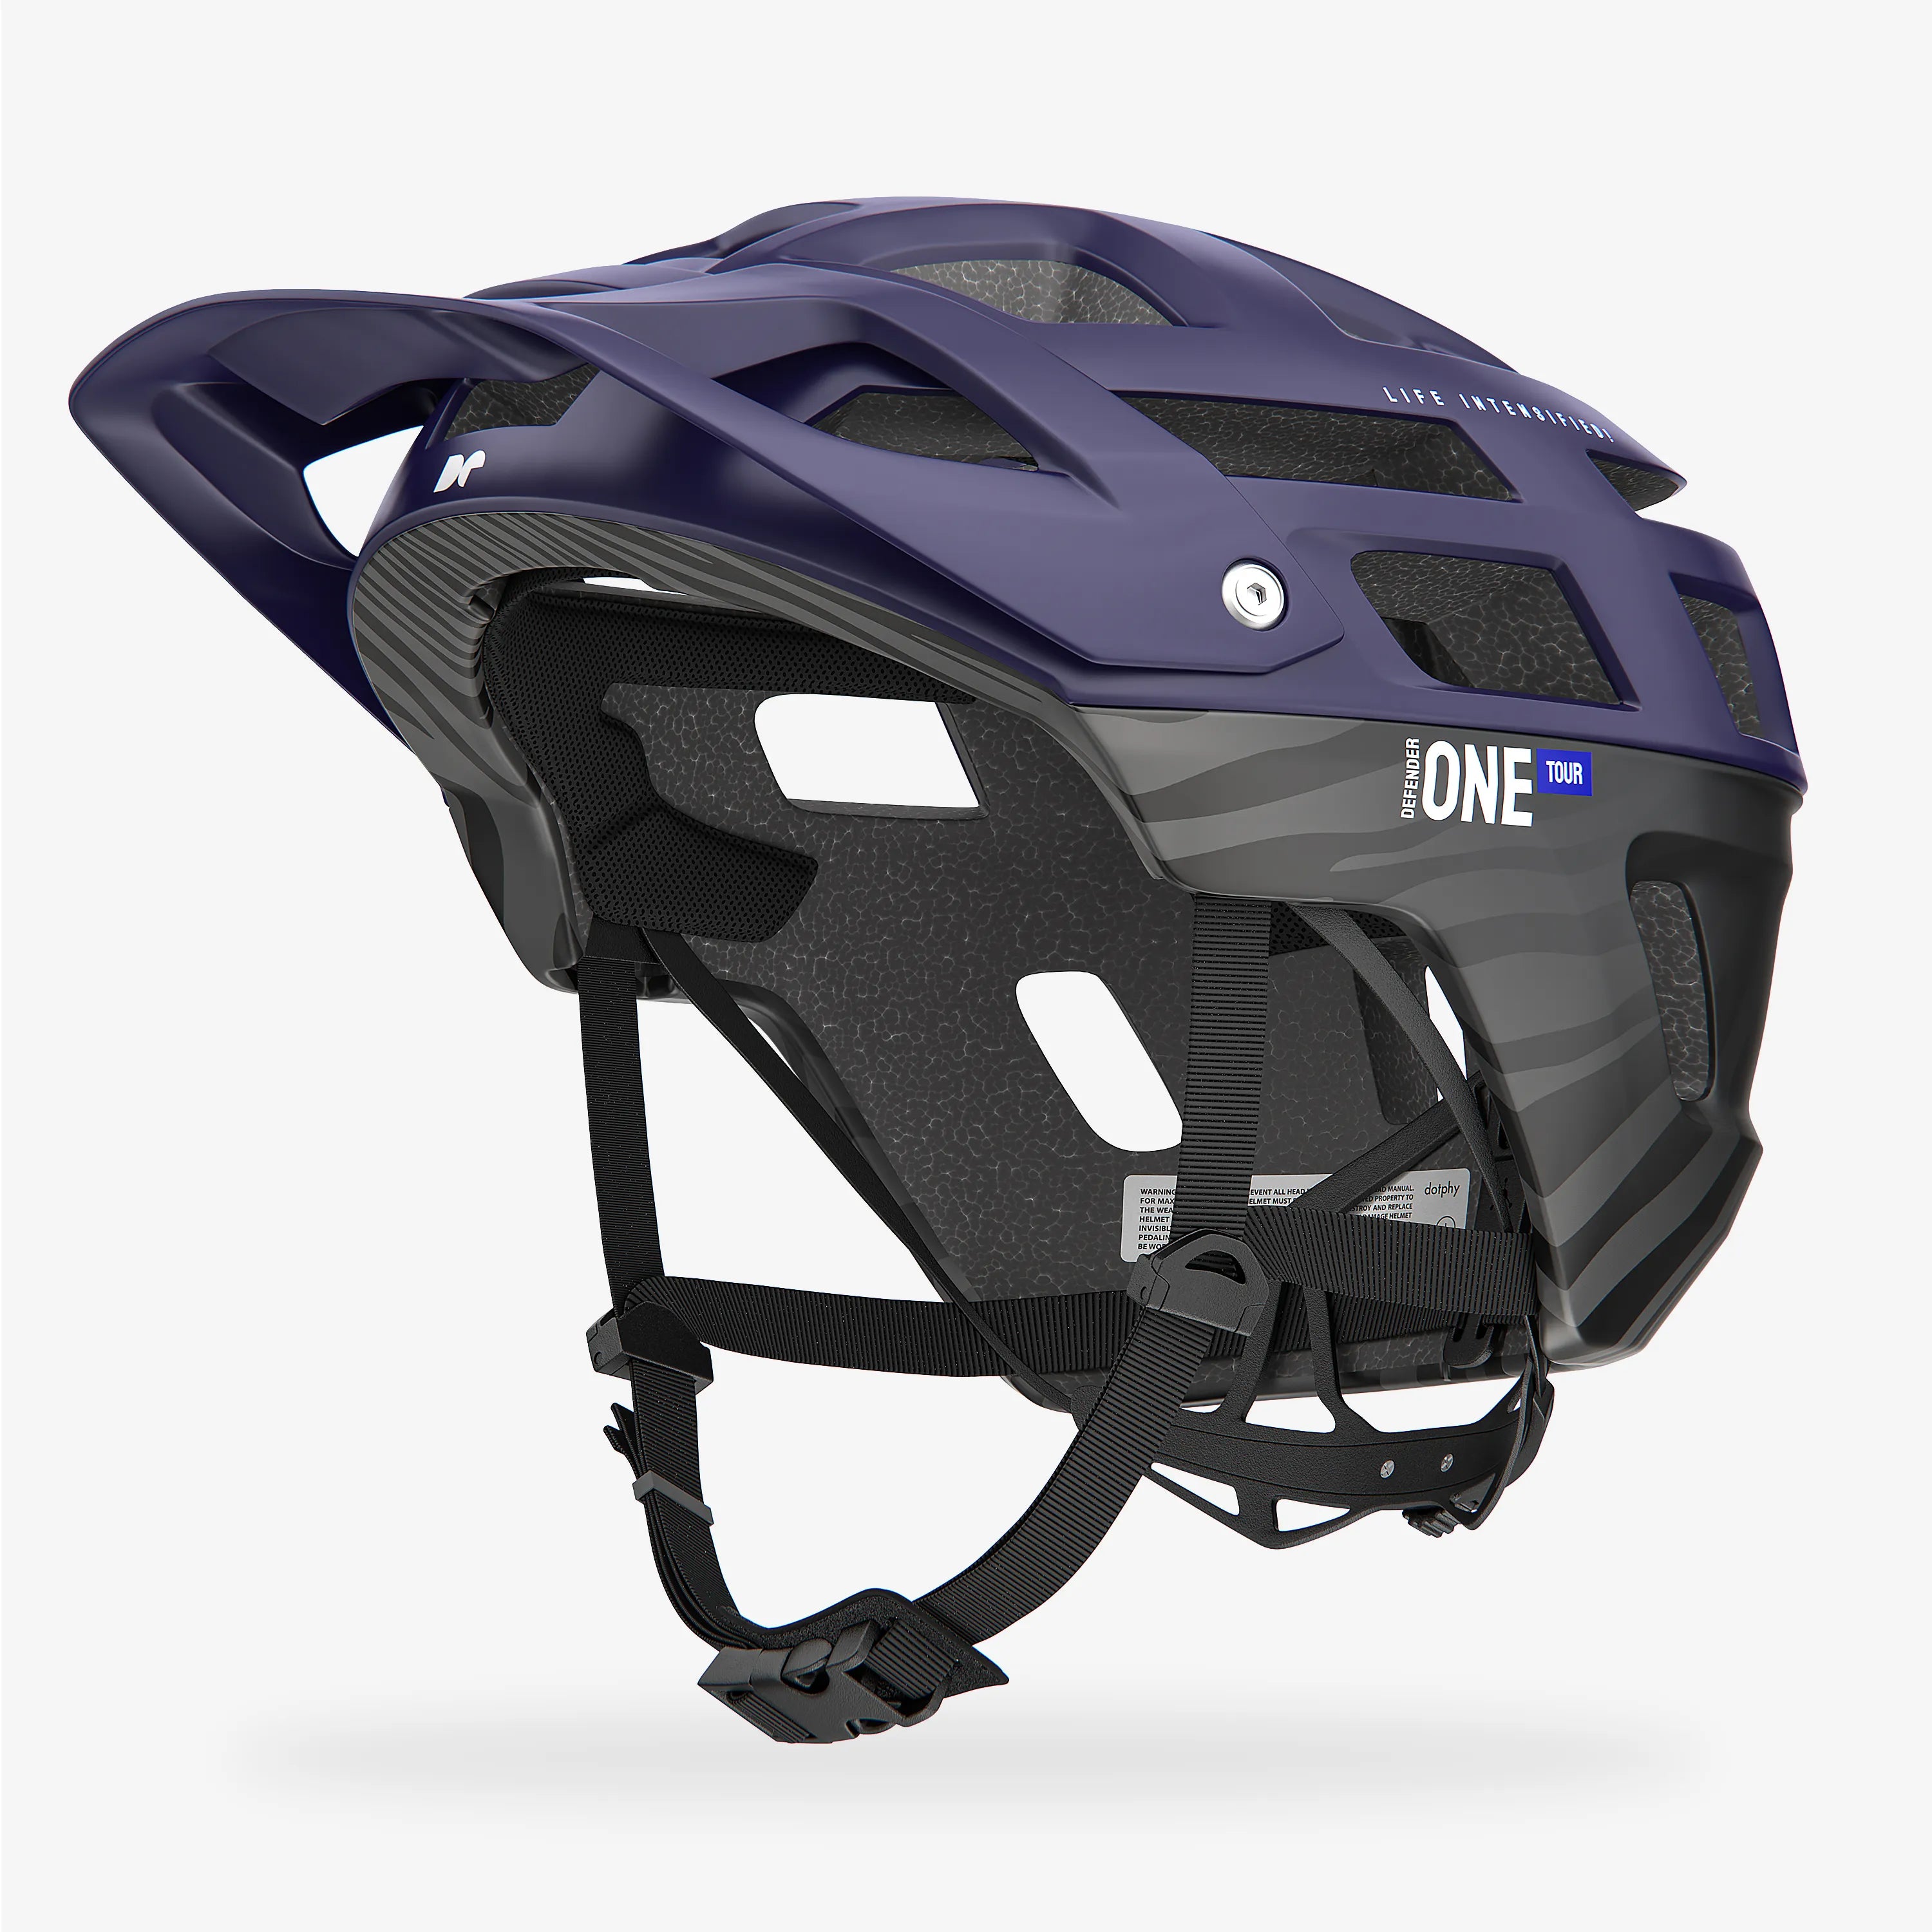 Defender One Tour Deep Purple Mountain Bike Helmet